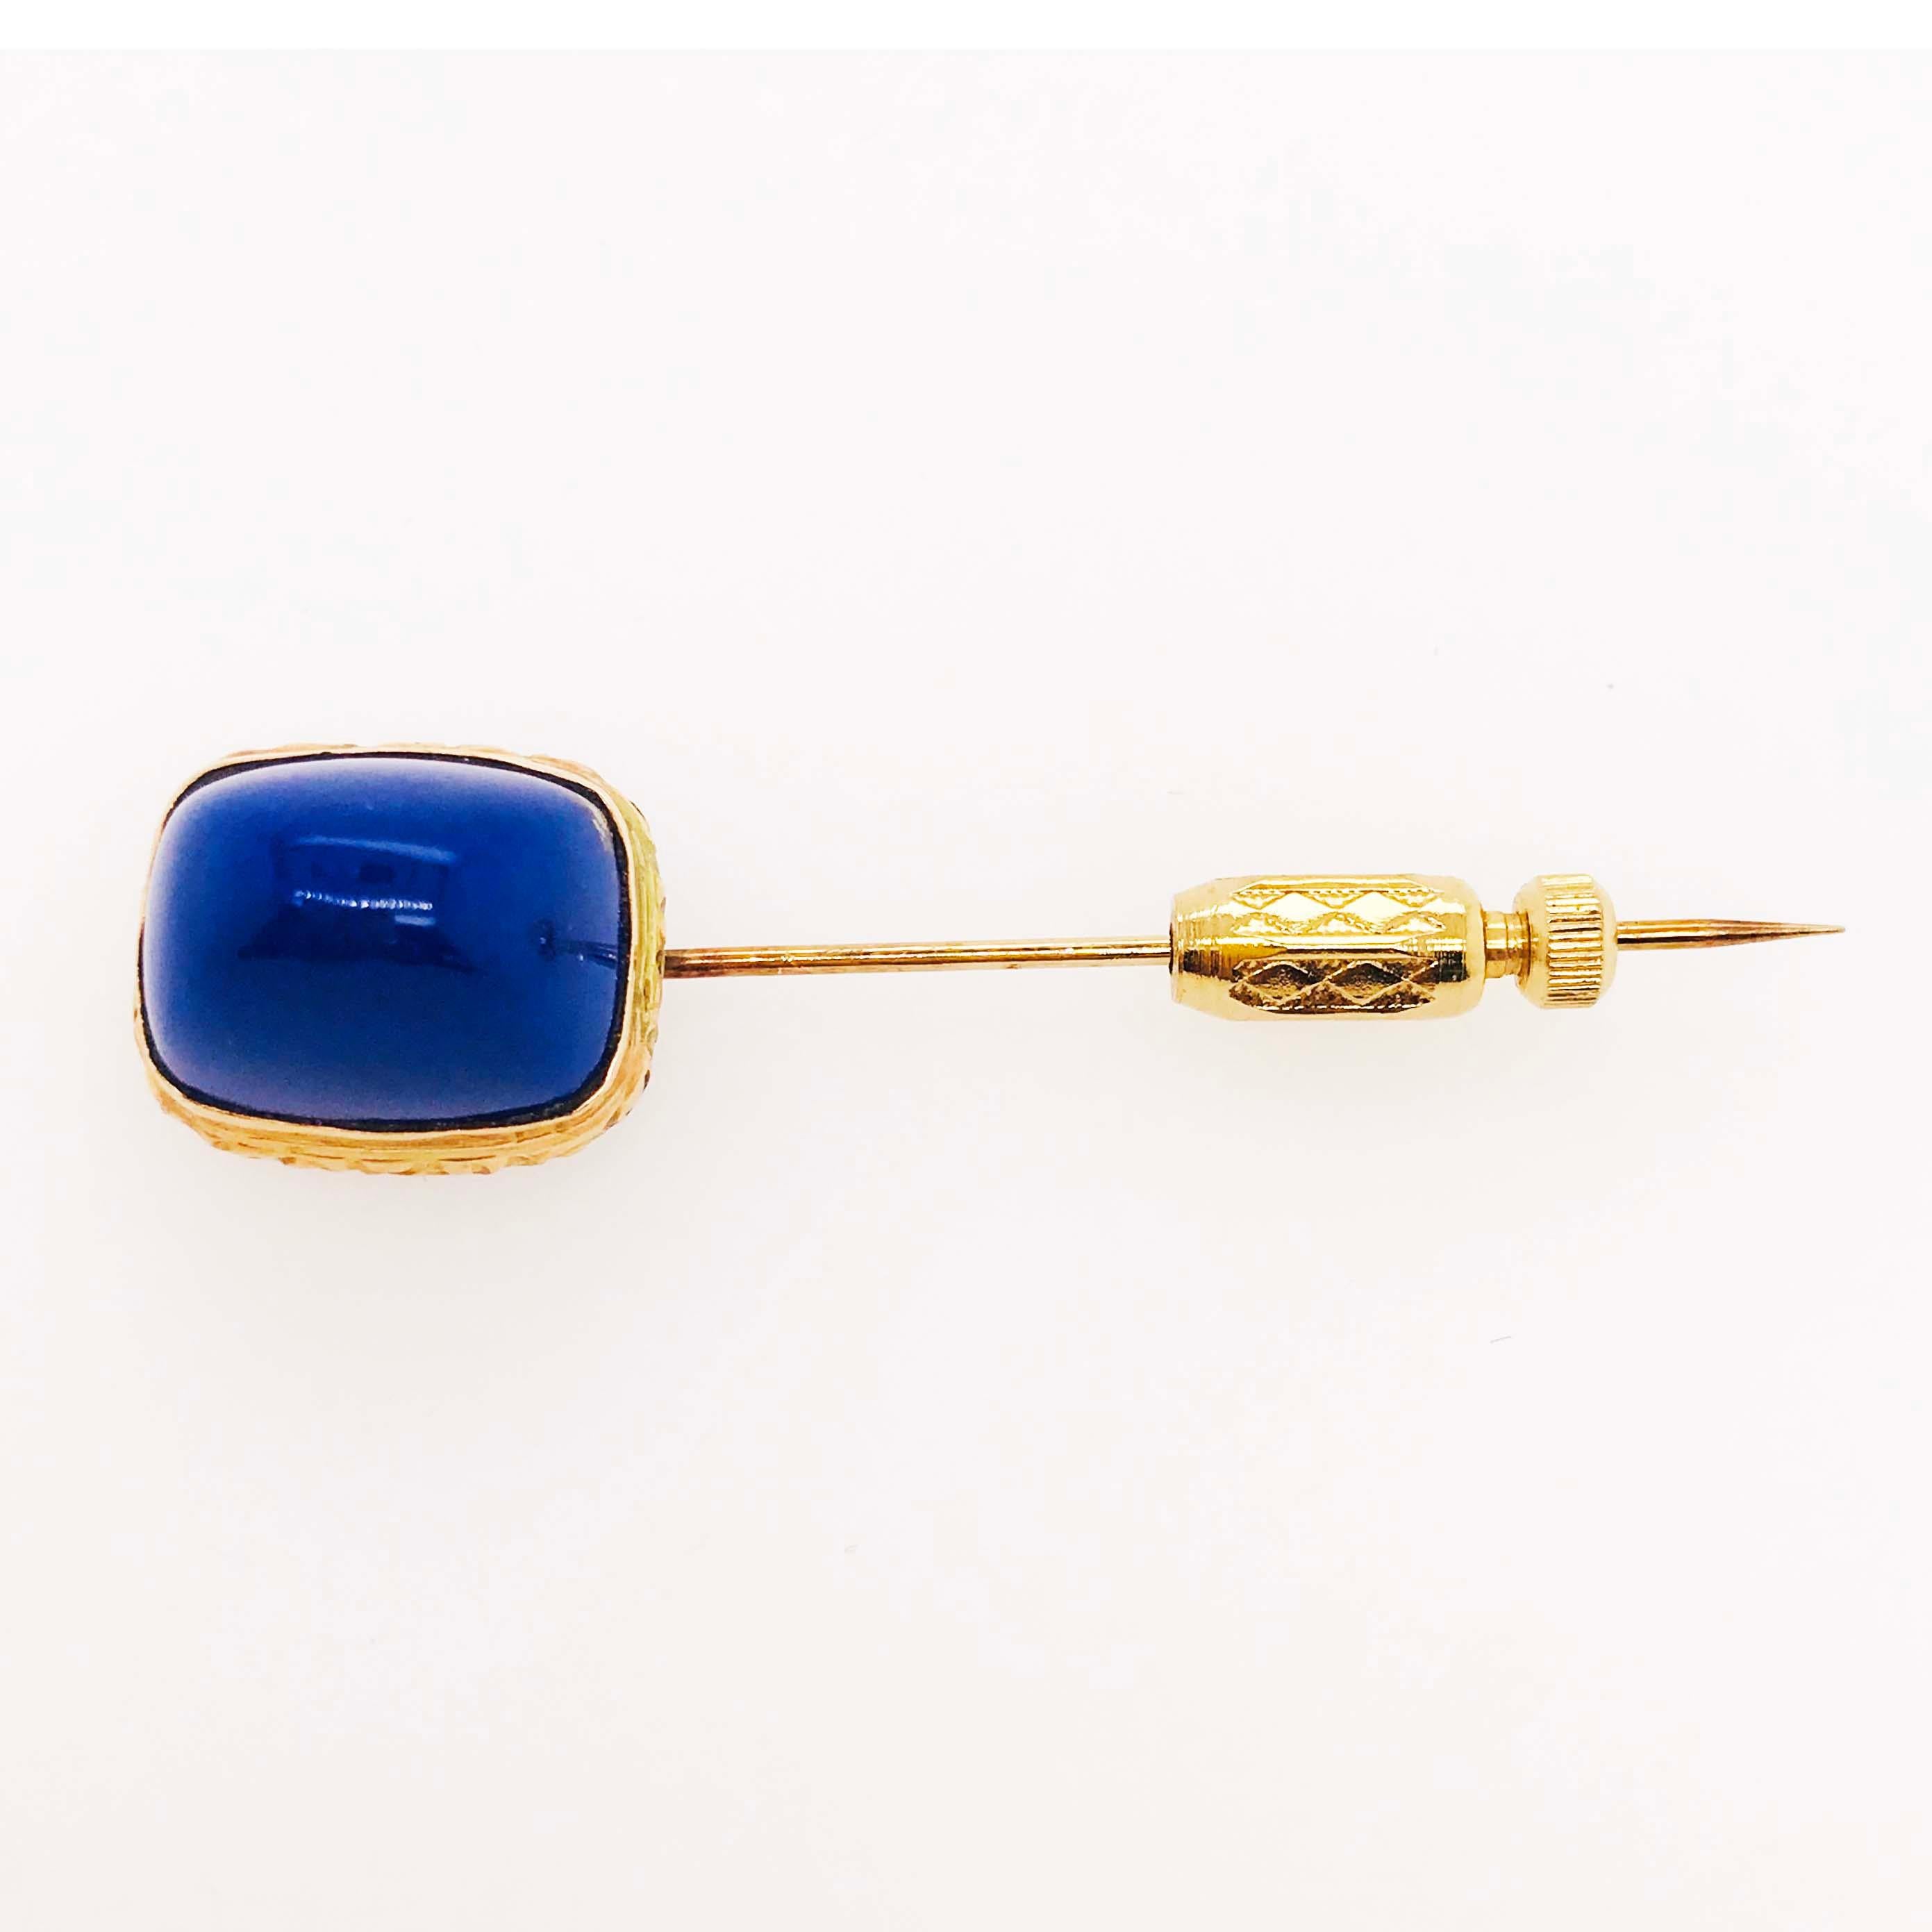 Blue Lapis Brooch, Gemstone Cabochon Handmade Brooch/Pin in 18 Karat Yellow Gold 1